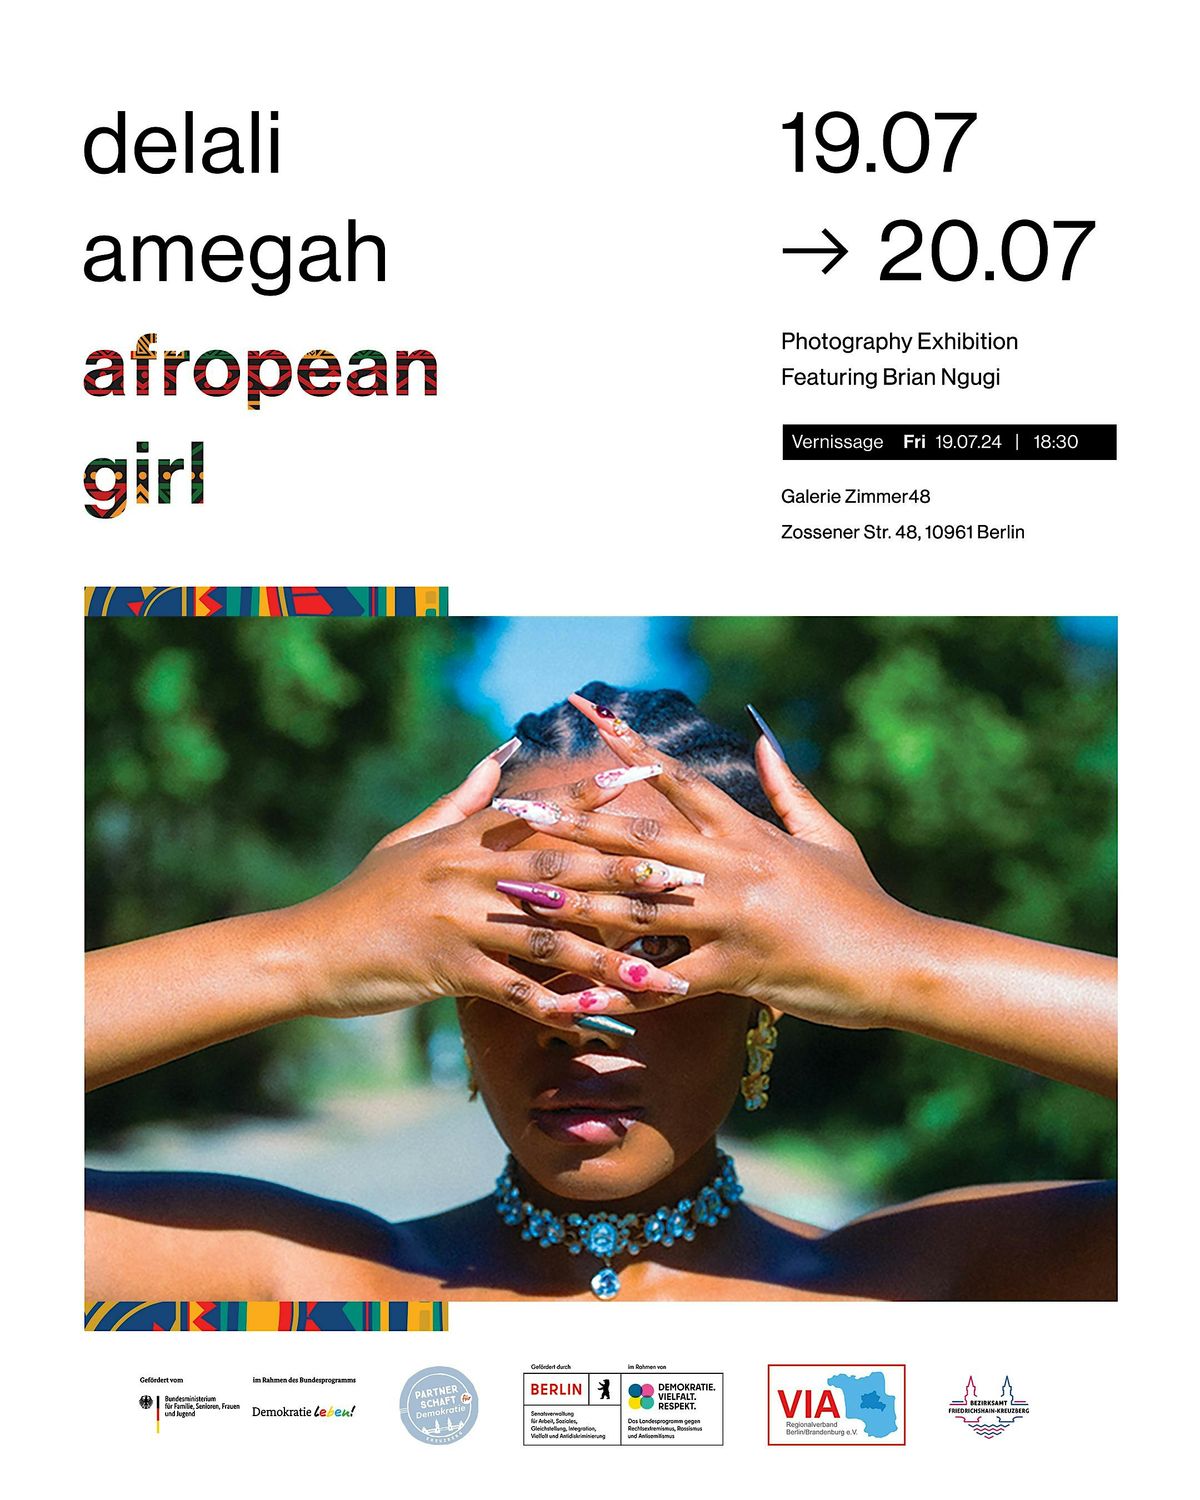 AFROPEAN GIRL - PHOTOGRAPHY EXHIBITION